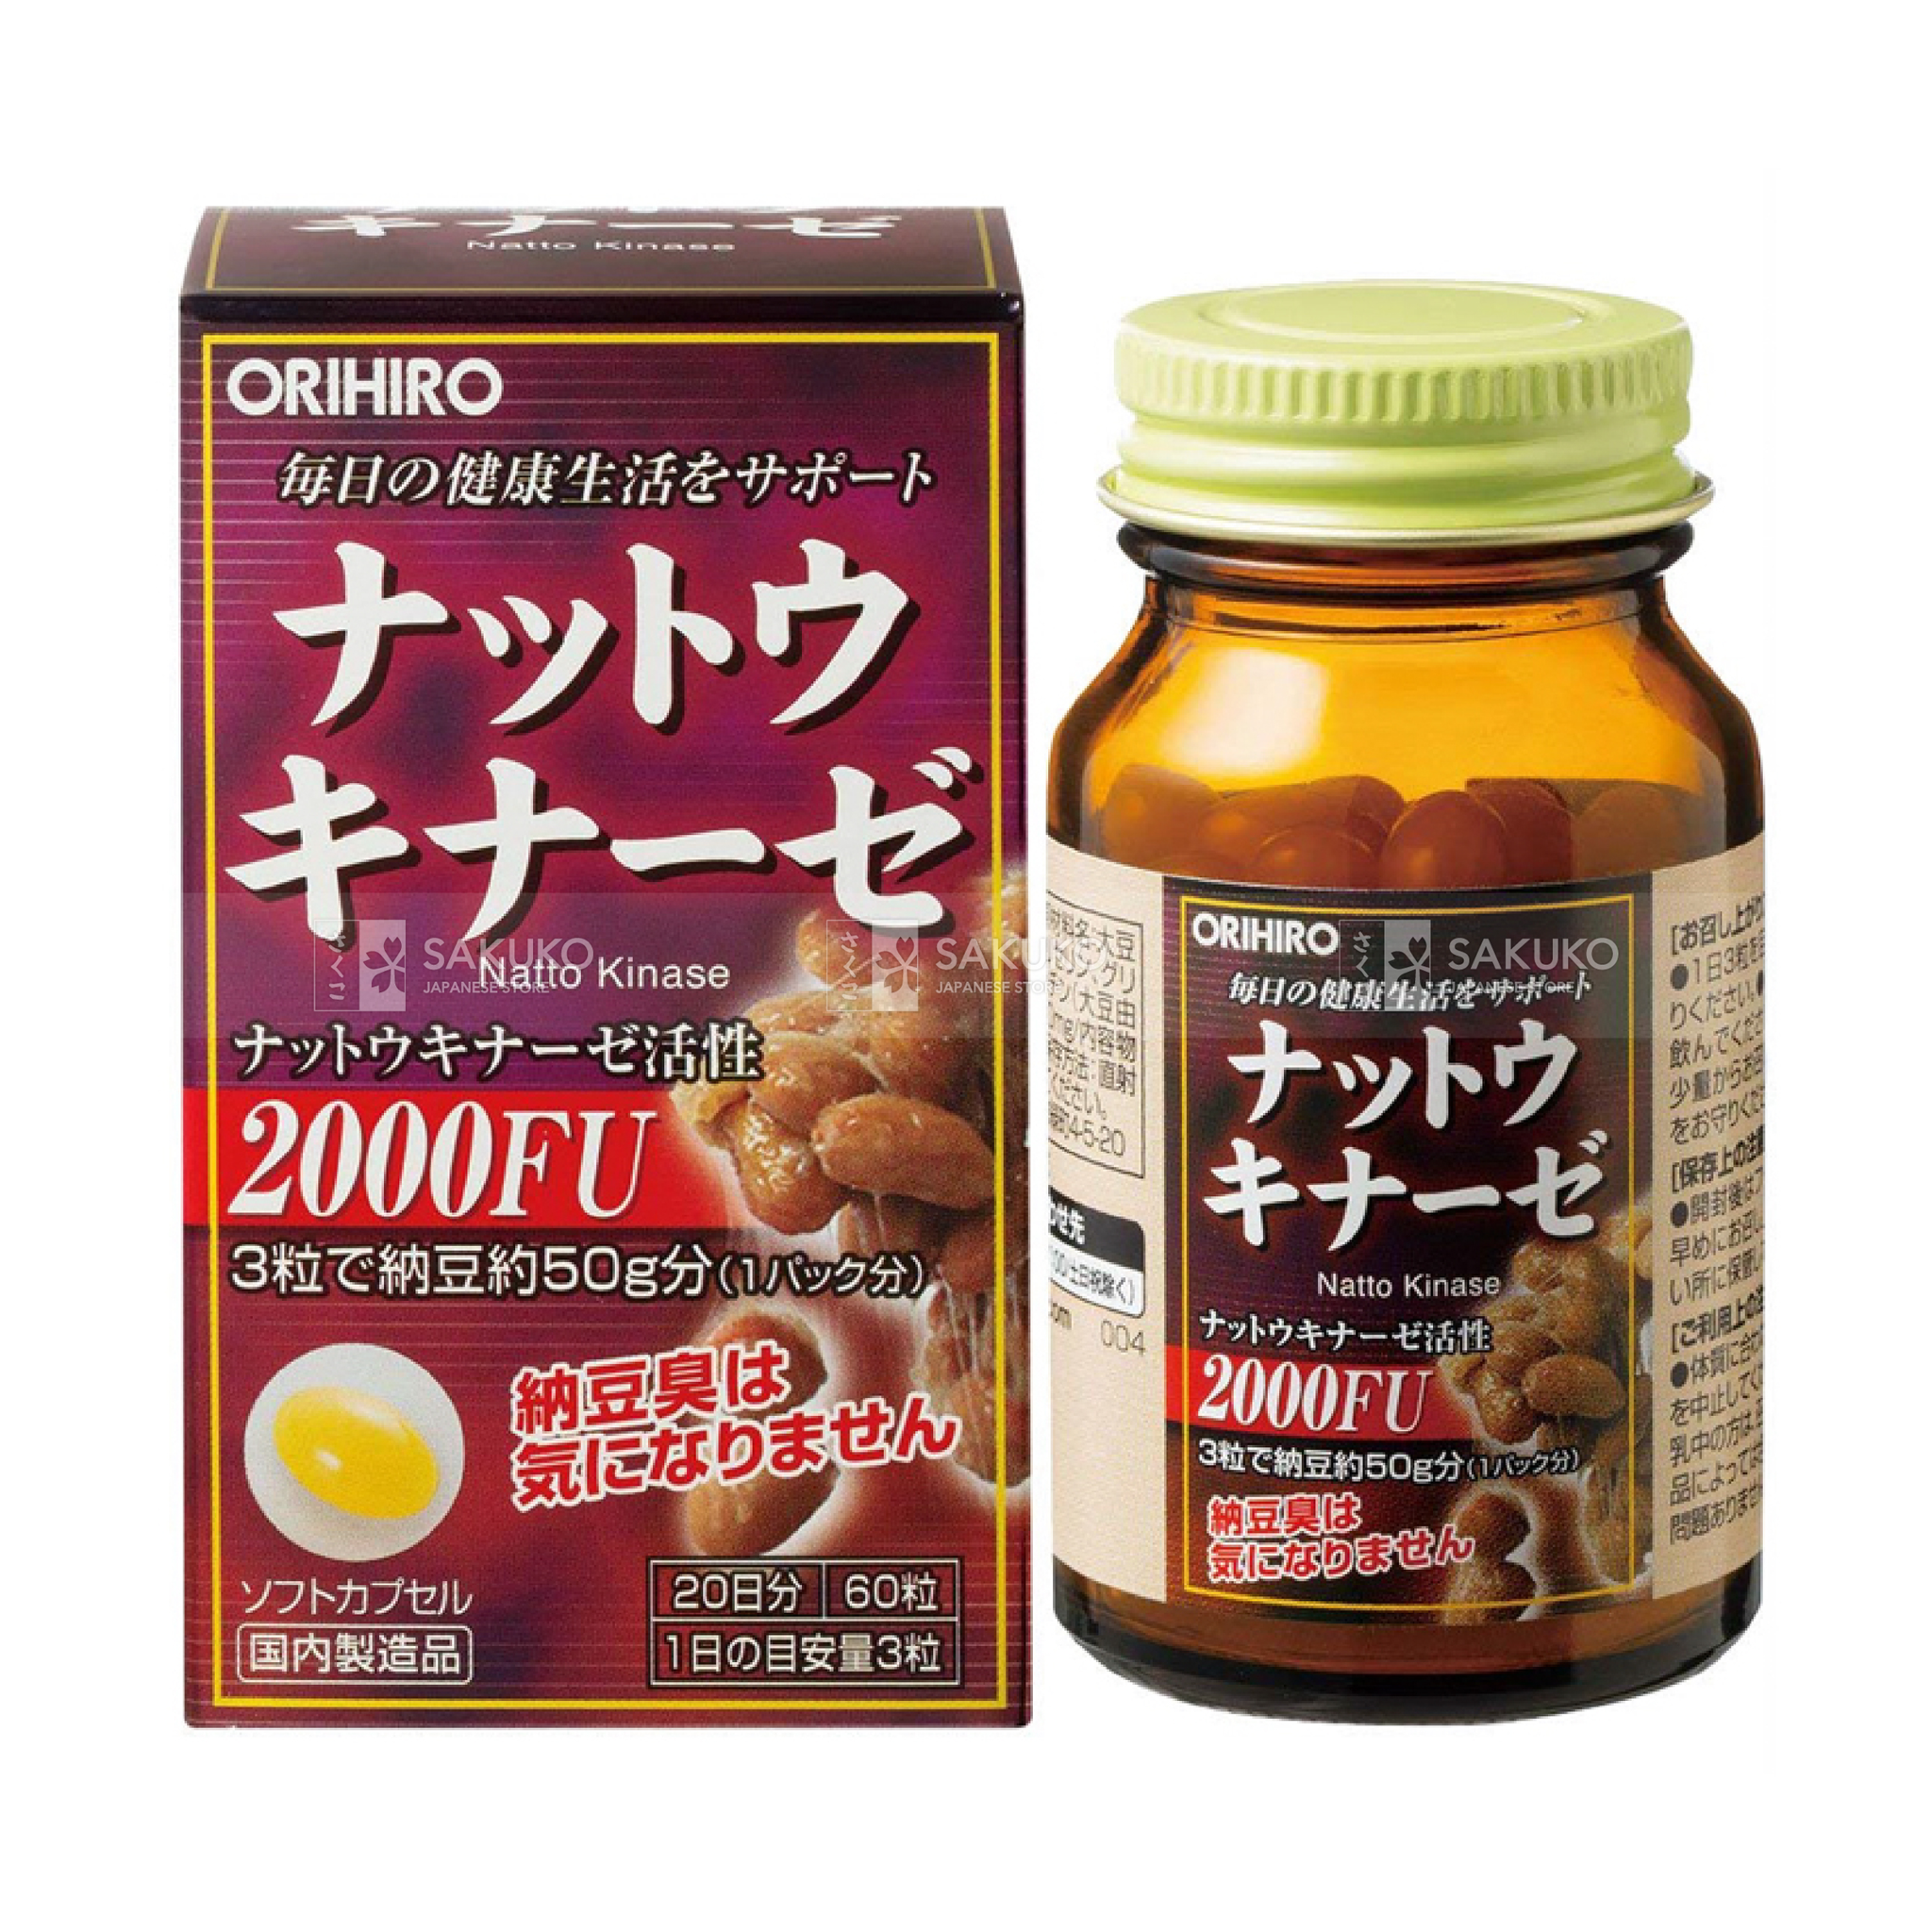  ORIHIRO- Viên uống Natto Kinase 2000FU 60 viên 